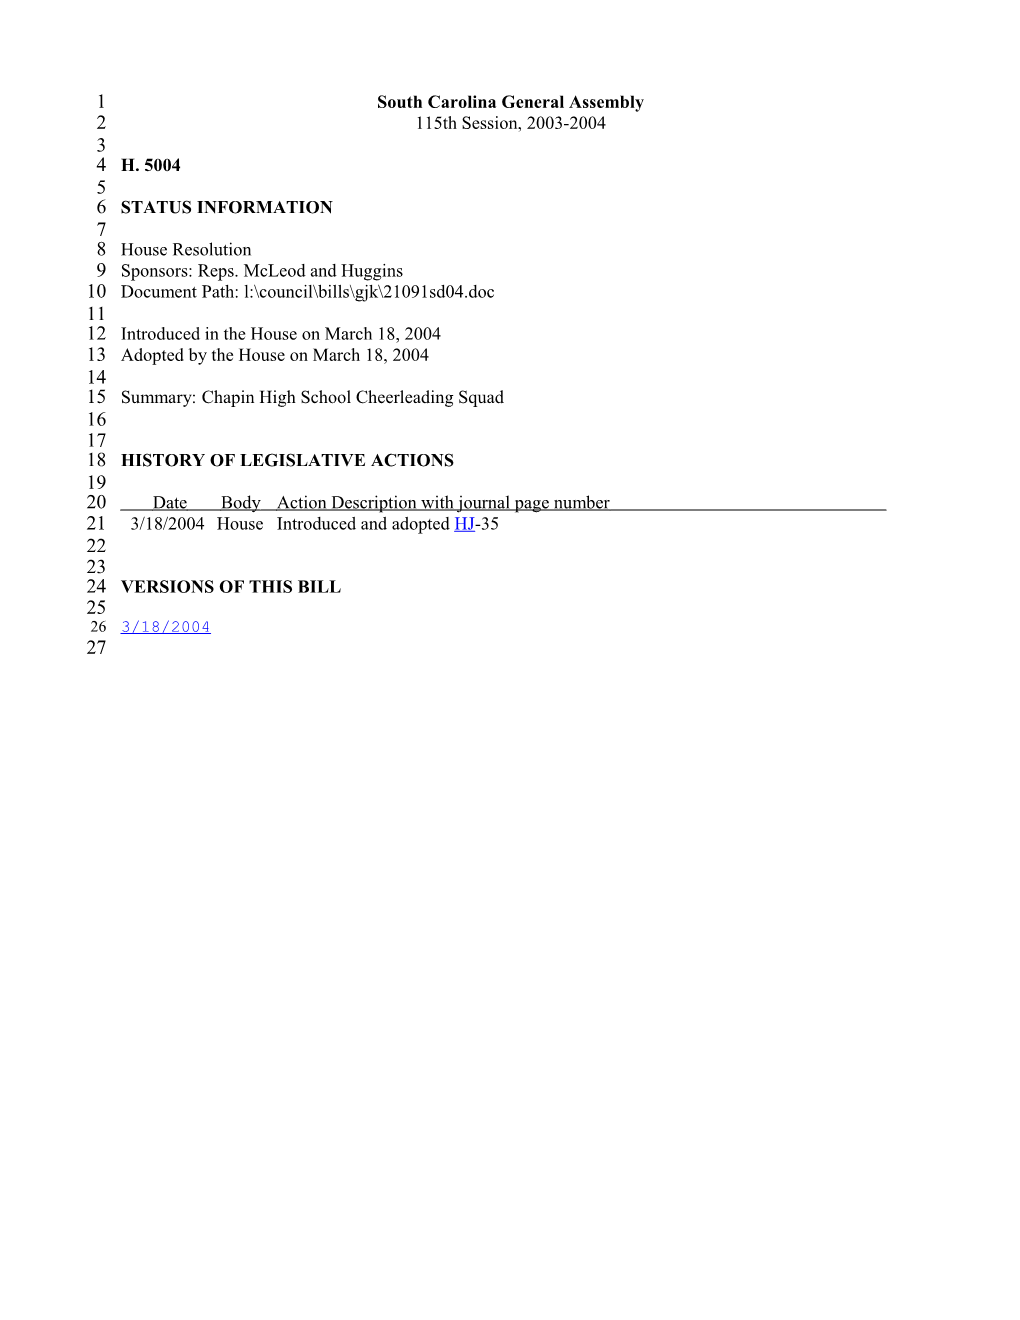 2003-2004 Bill 5004: Chapin High School Cheerleading Squad - South Carolina Legislature Online